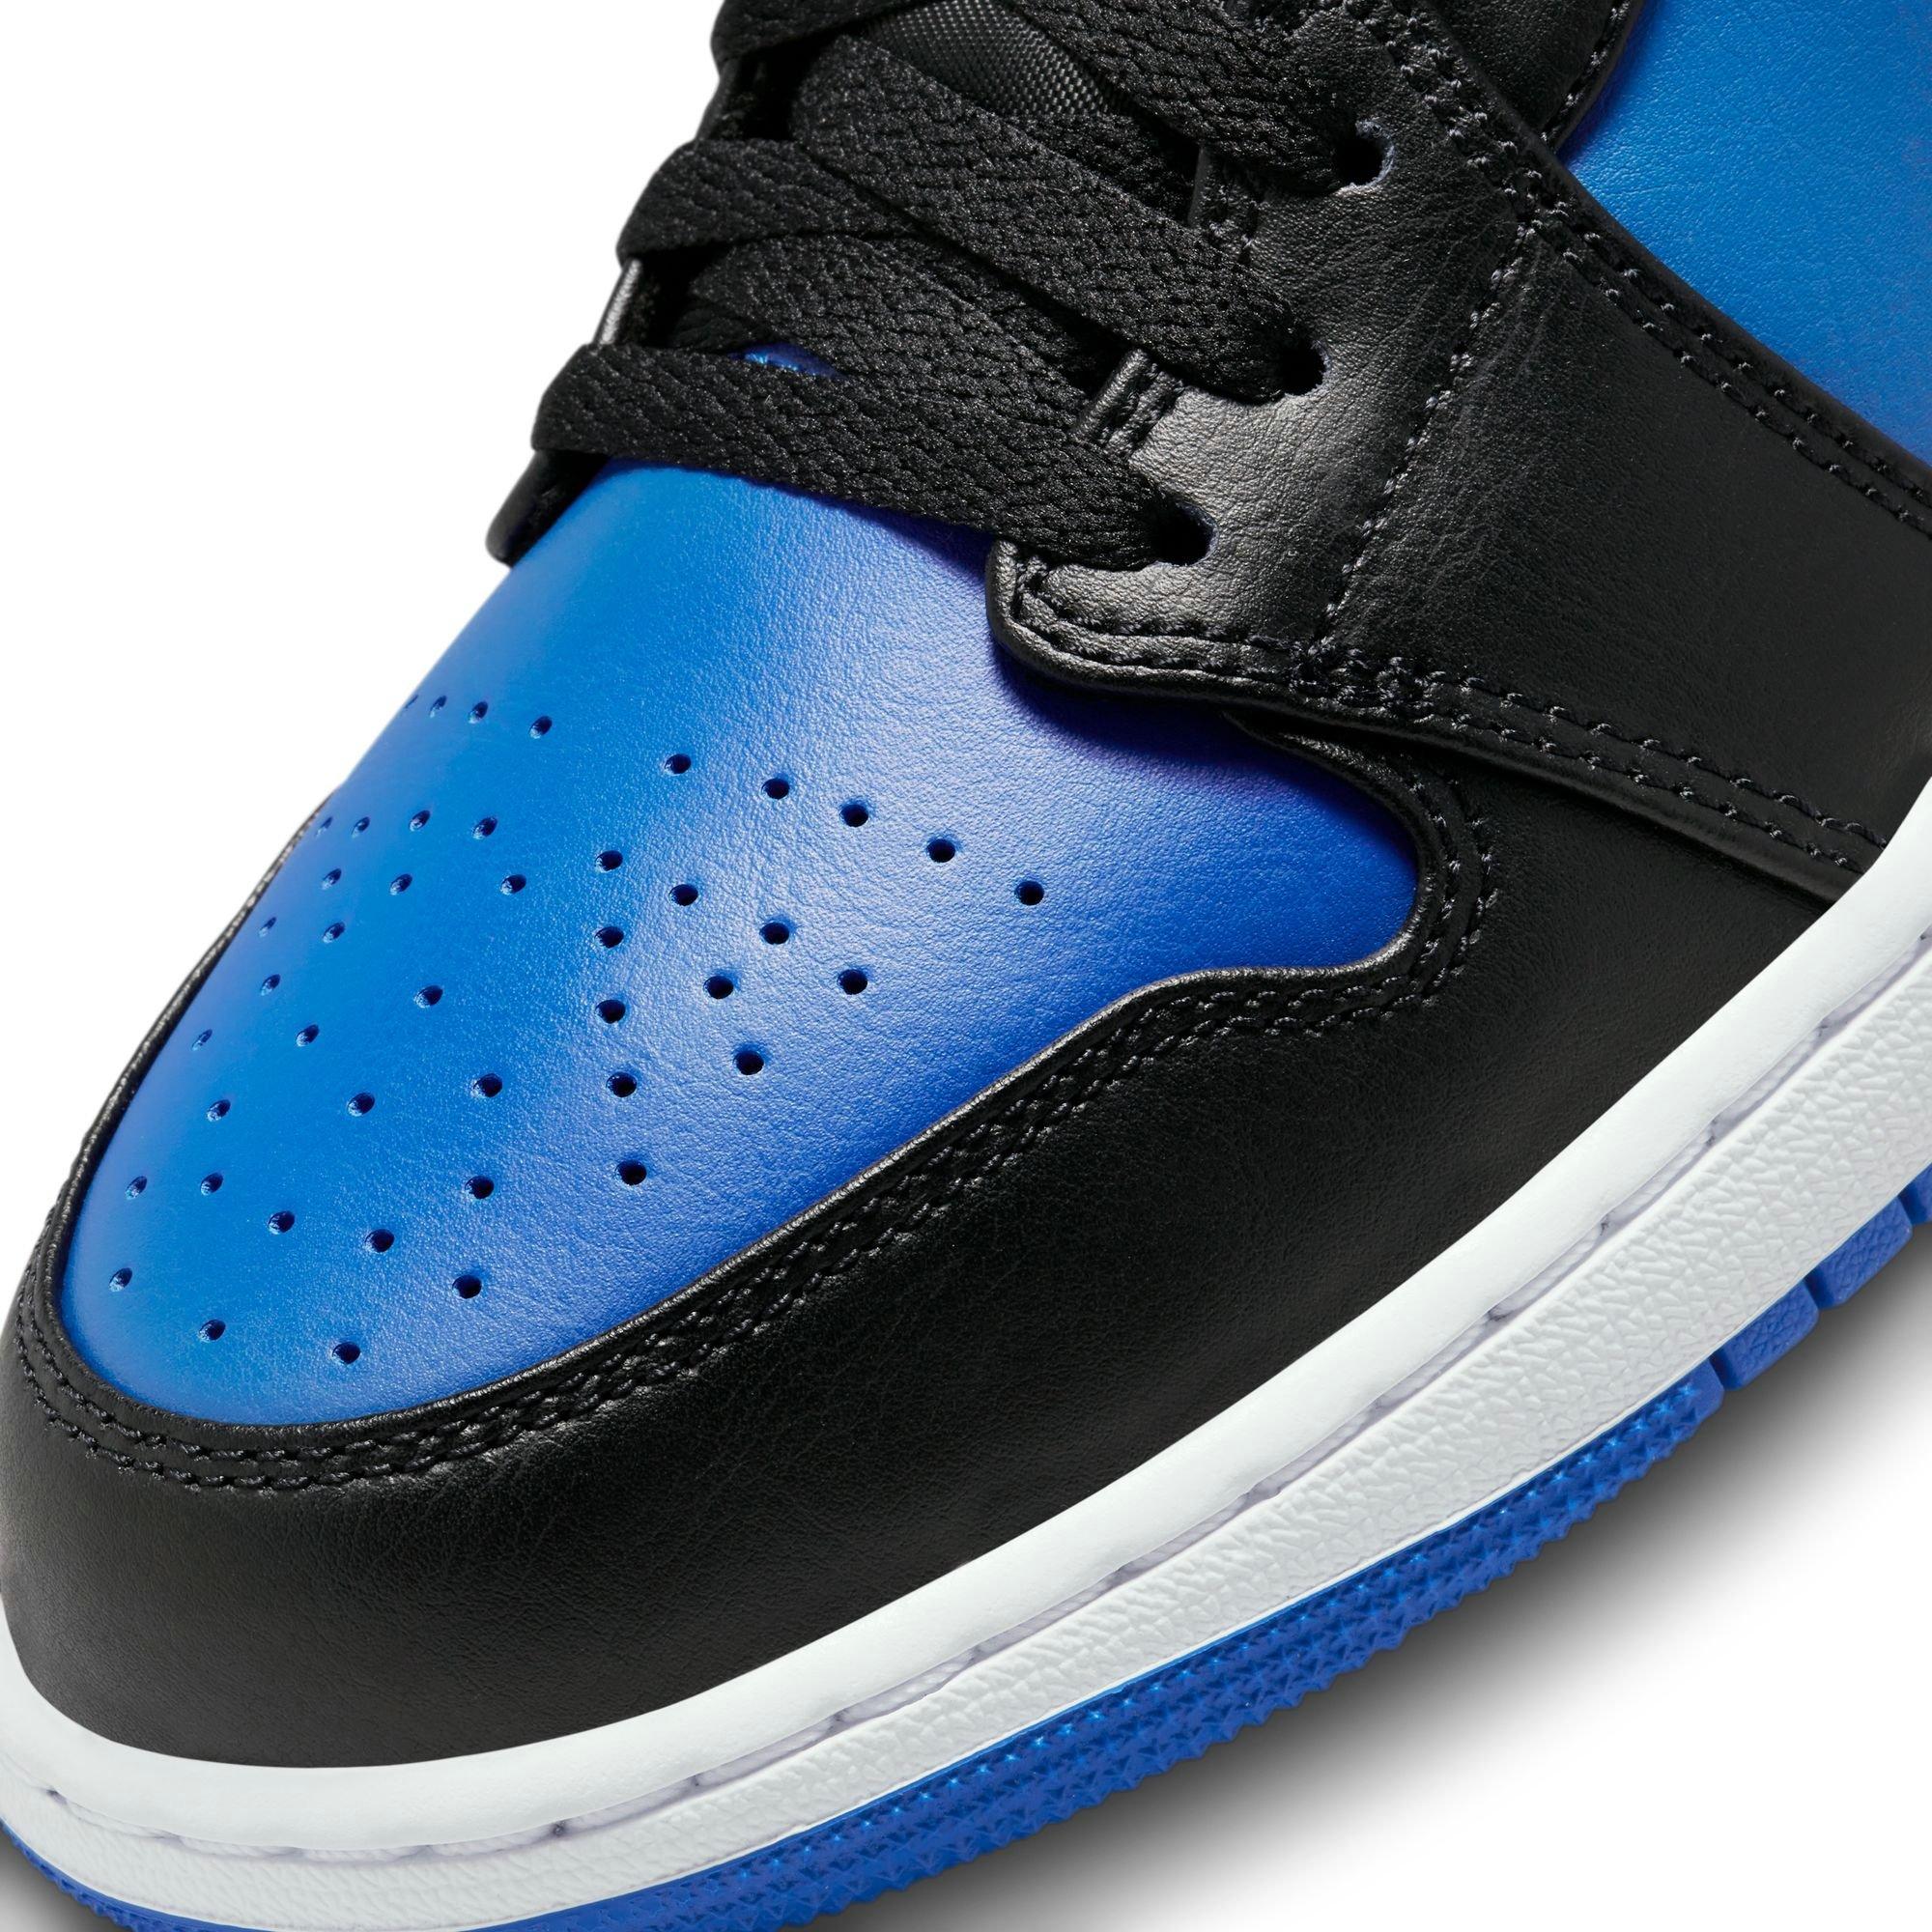 Air Jordan 1 (I) - Black / Royal Blue - Celebrity Kicks (Guess Who